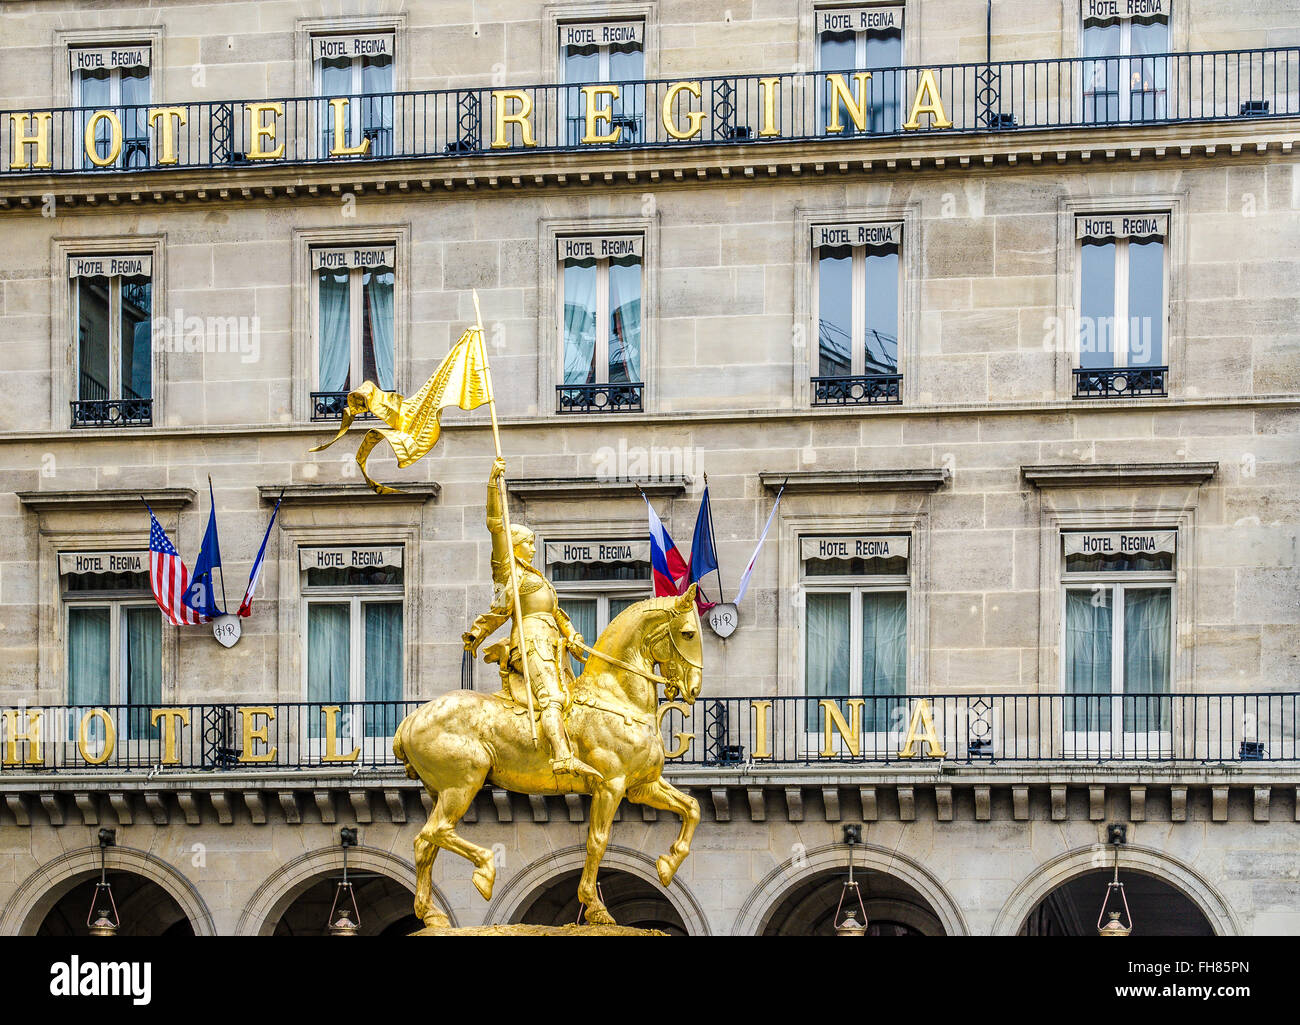 Parigi, Franc - Marzo 17, 2012: La statua dorata di Santa Giovanna d'arco sulla Rue de Rivoli a Parigi, fotografi riprese la Foto Stock